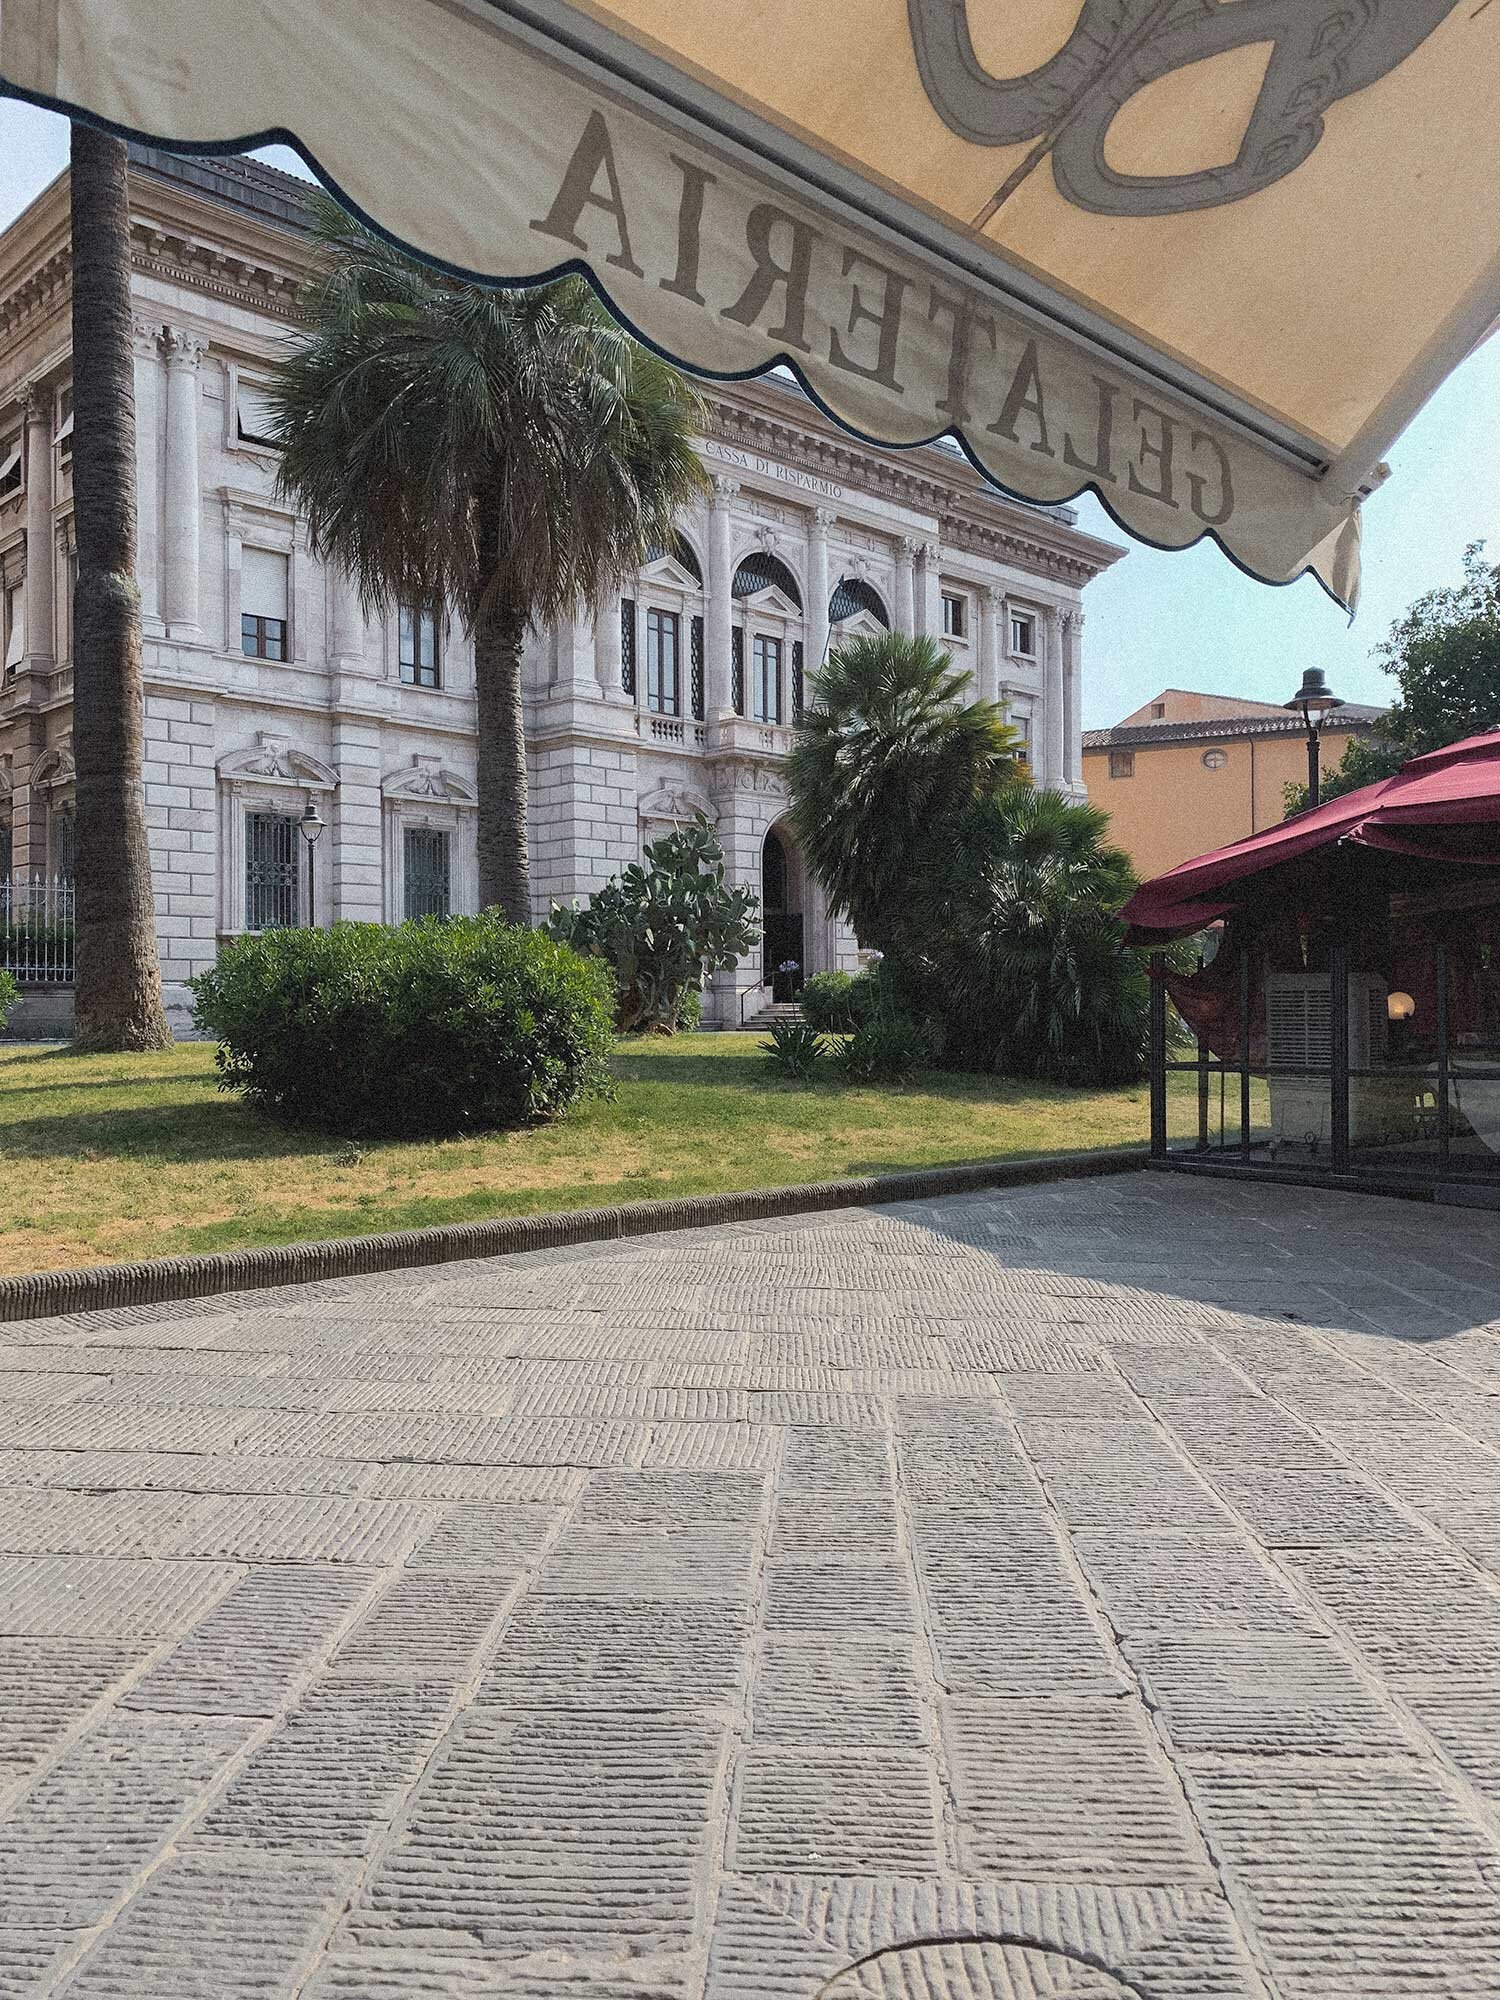 We had delicious ice cream at Gelateria Orso Bianco in Piazza Dante Alighieri.